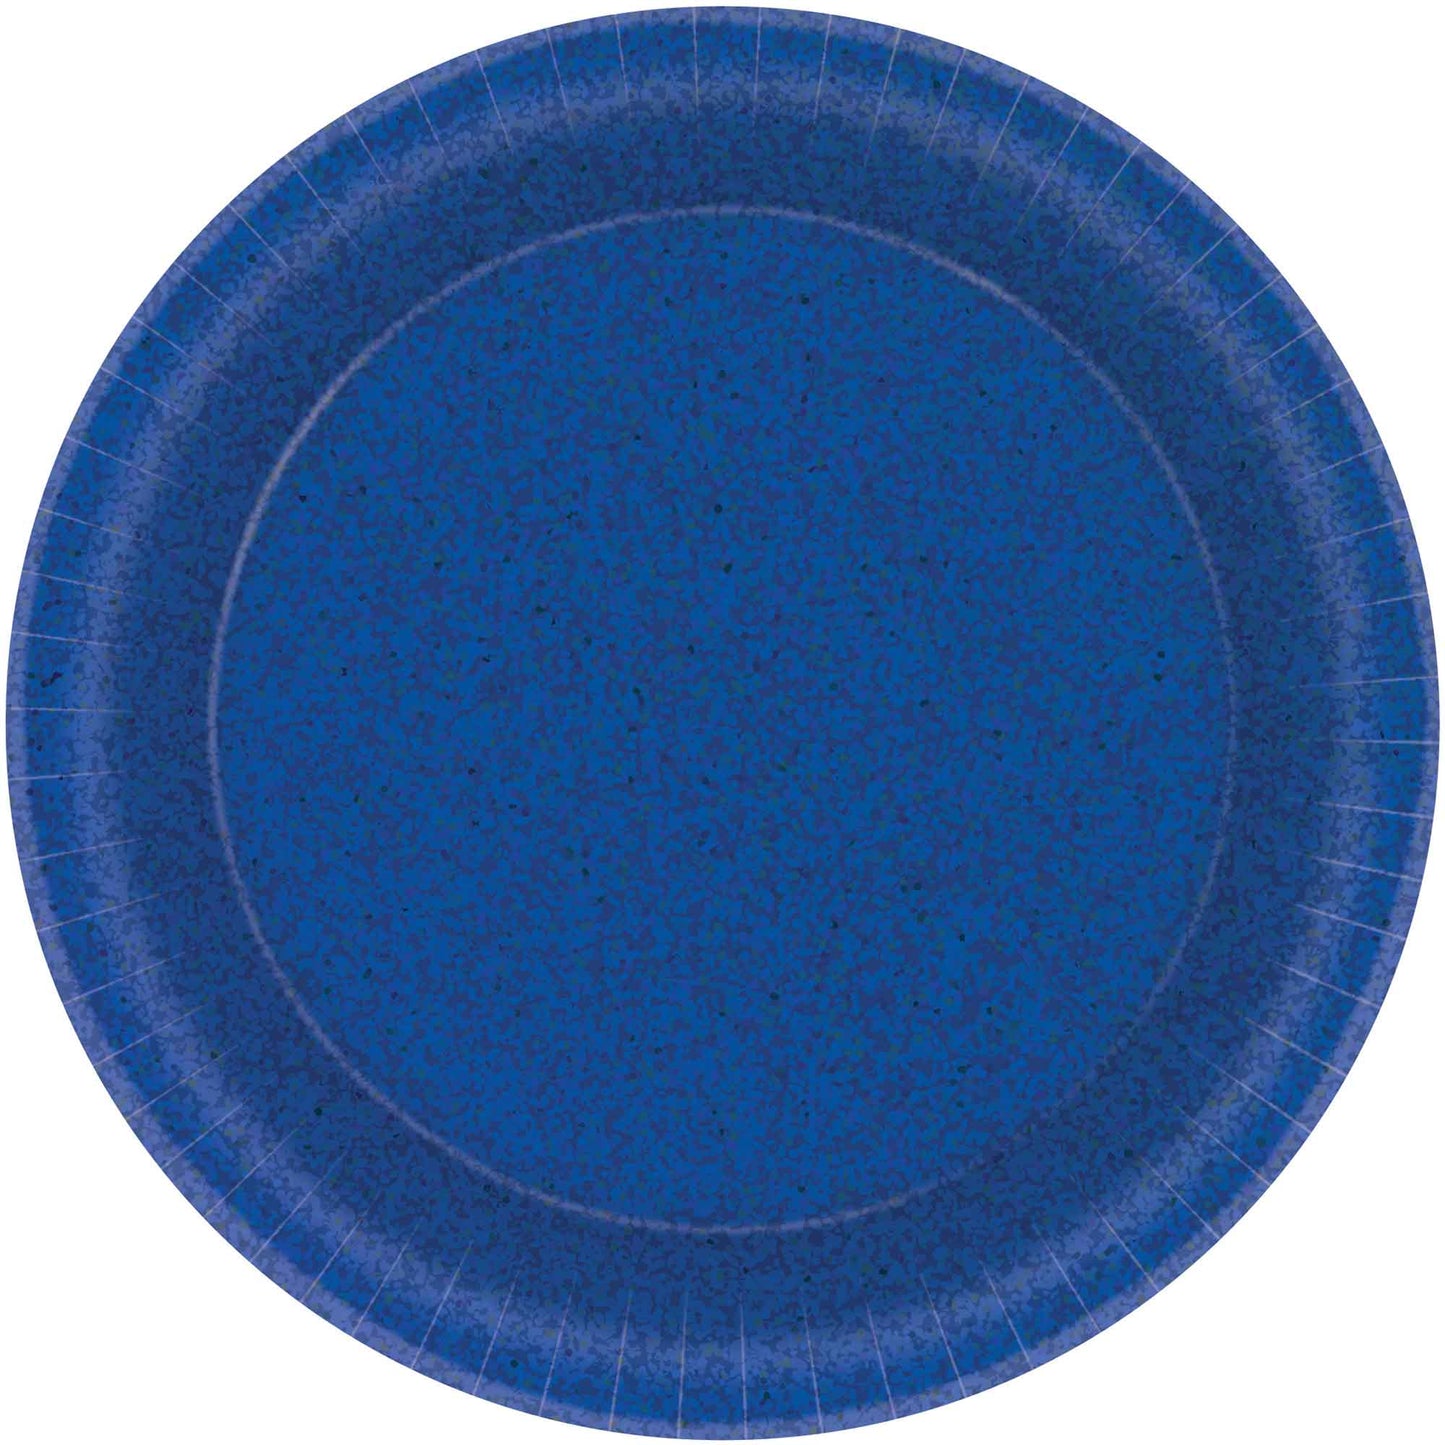 Prismatic 21cm Bright Royal Blue Round Paper Plates